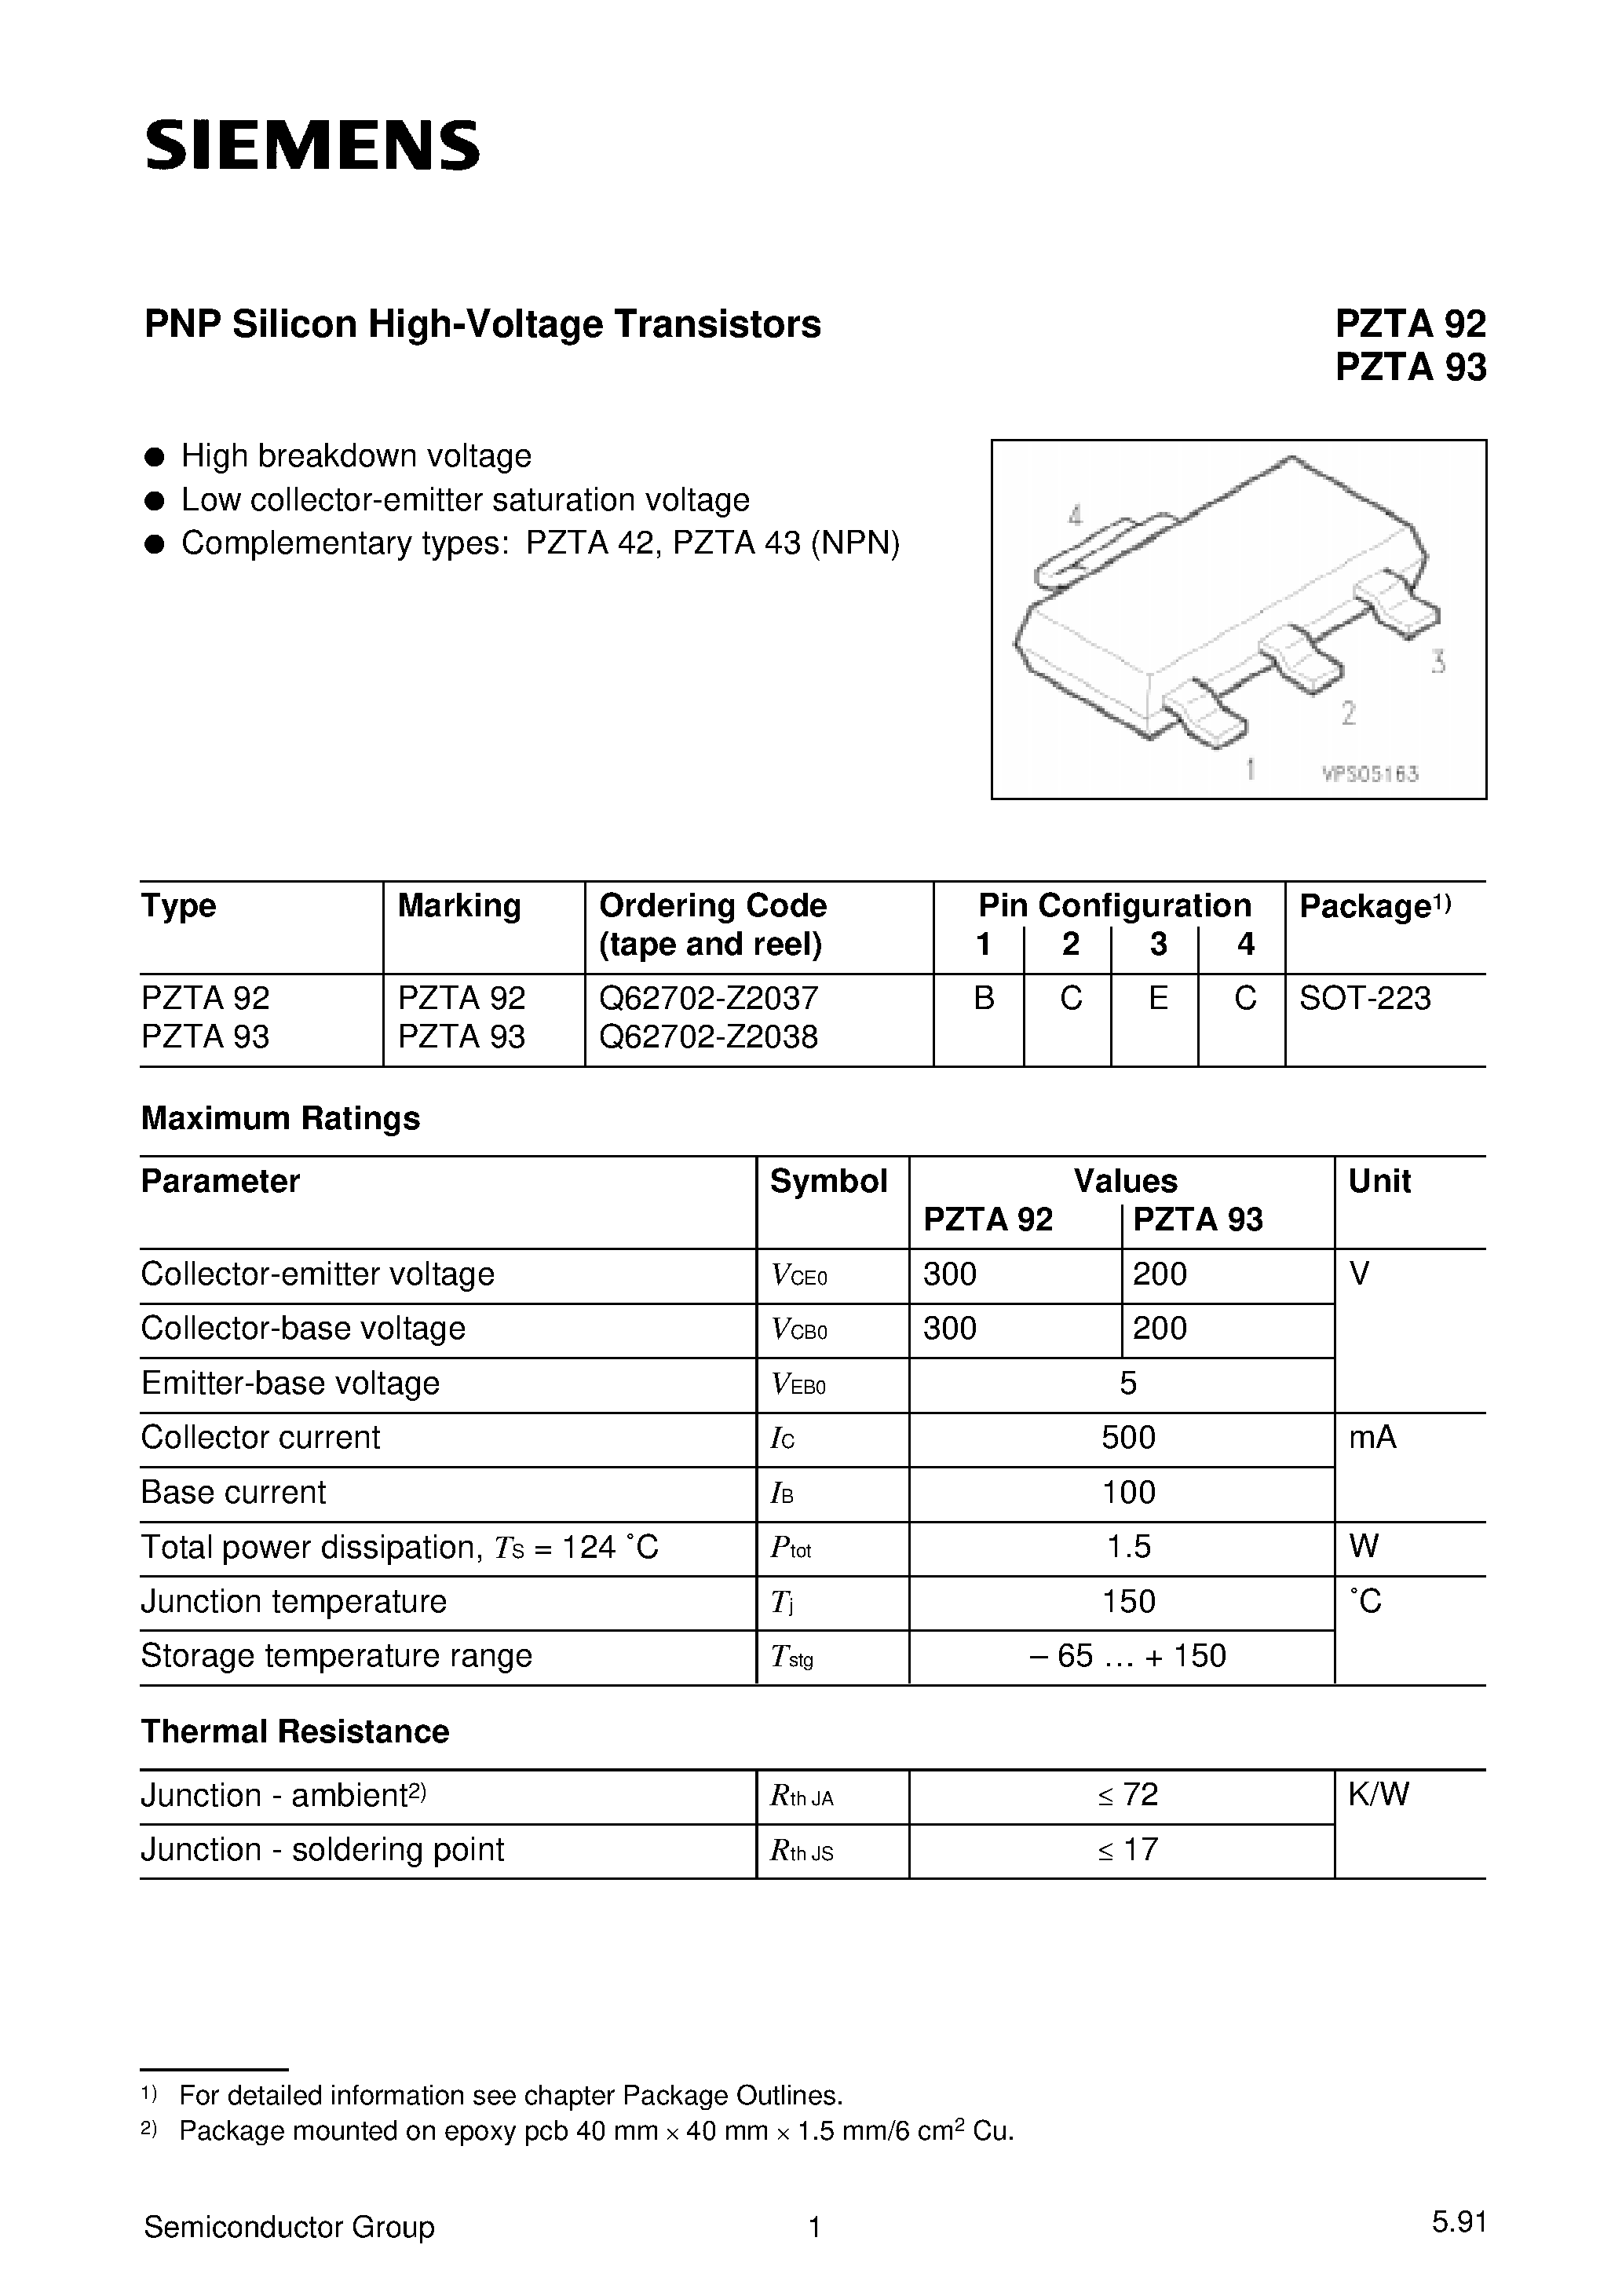 Datasheet PZTA92 - PNP Silicon High-Voltage Transistors page 1